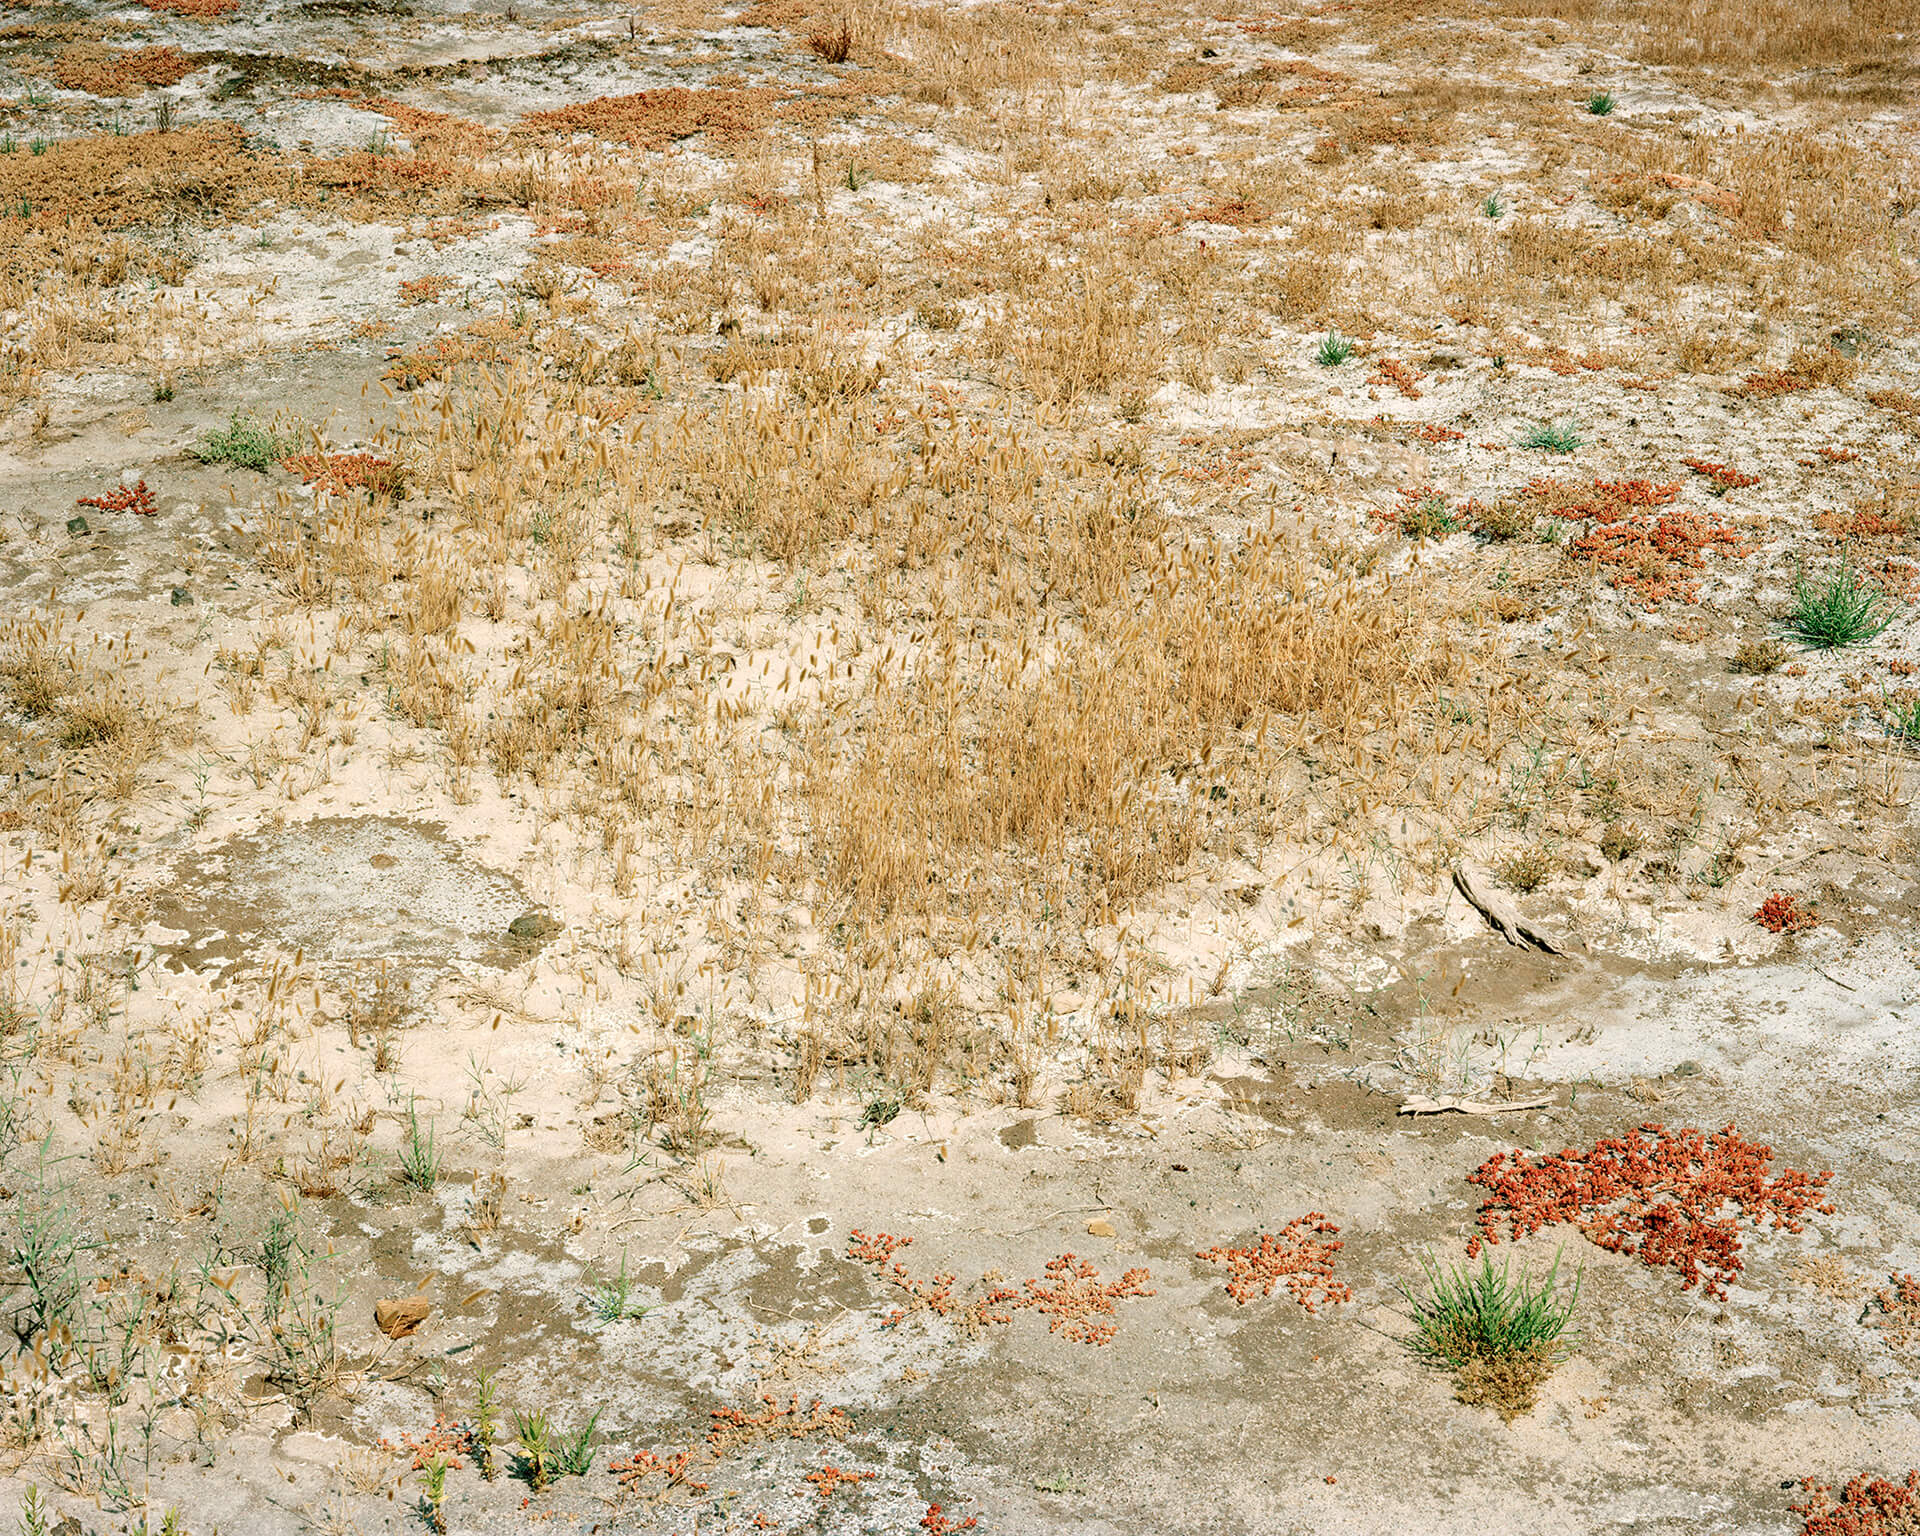 Corinne Silva, Desert Oasis V, Empty Lot, from Badlands 2011. C-type photograph, 127 x 101 cm